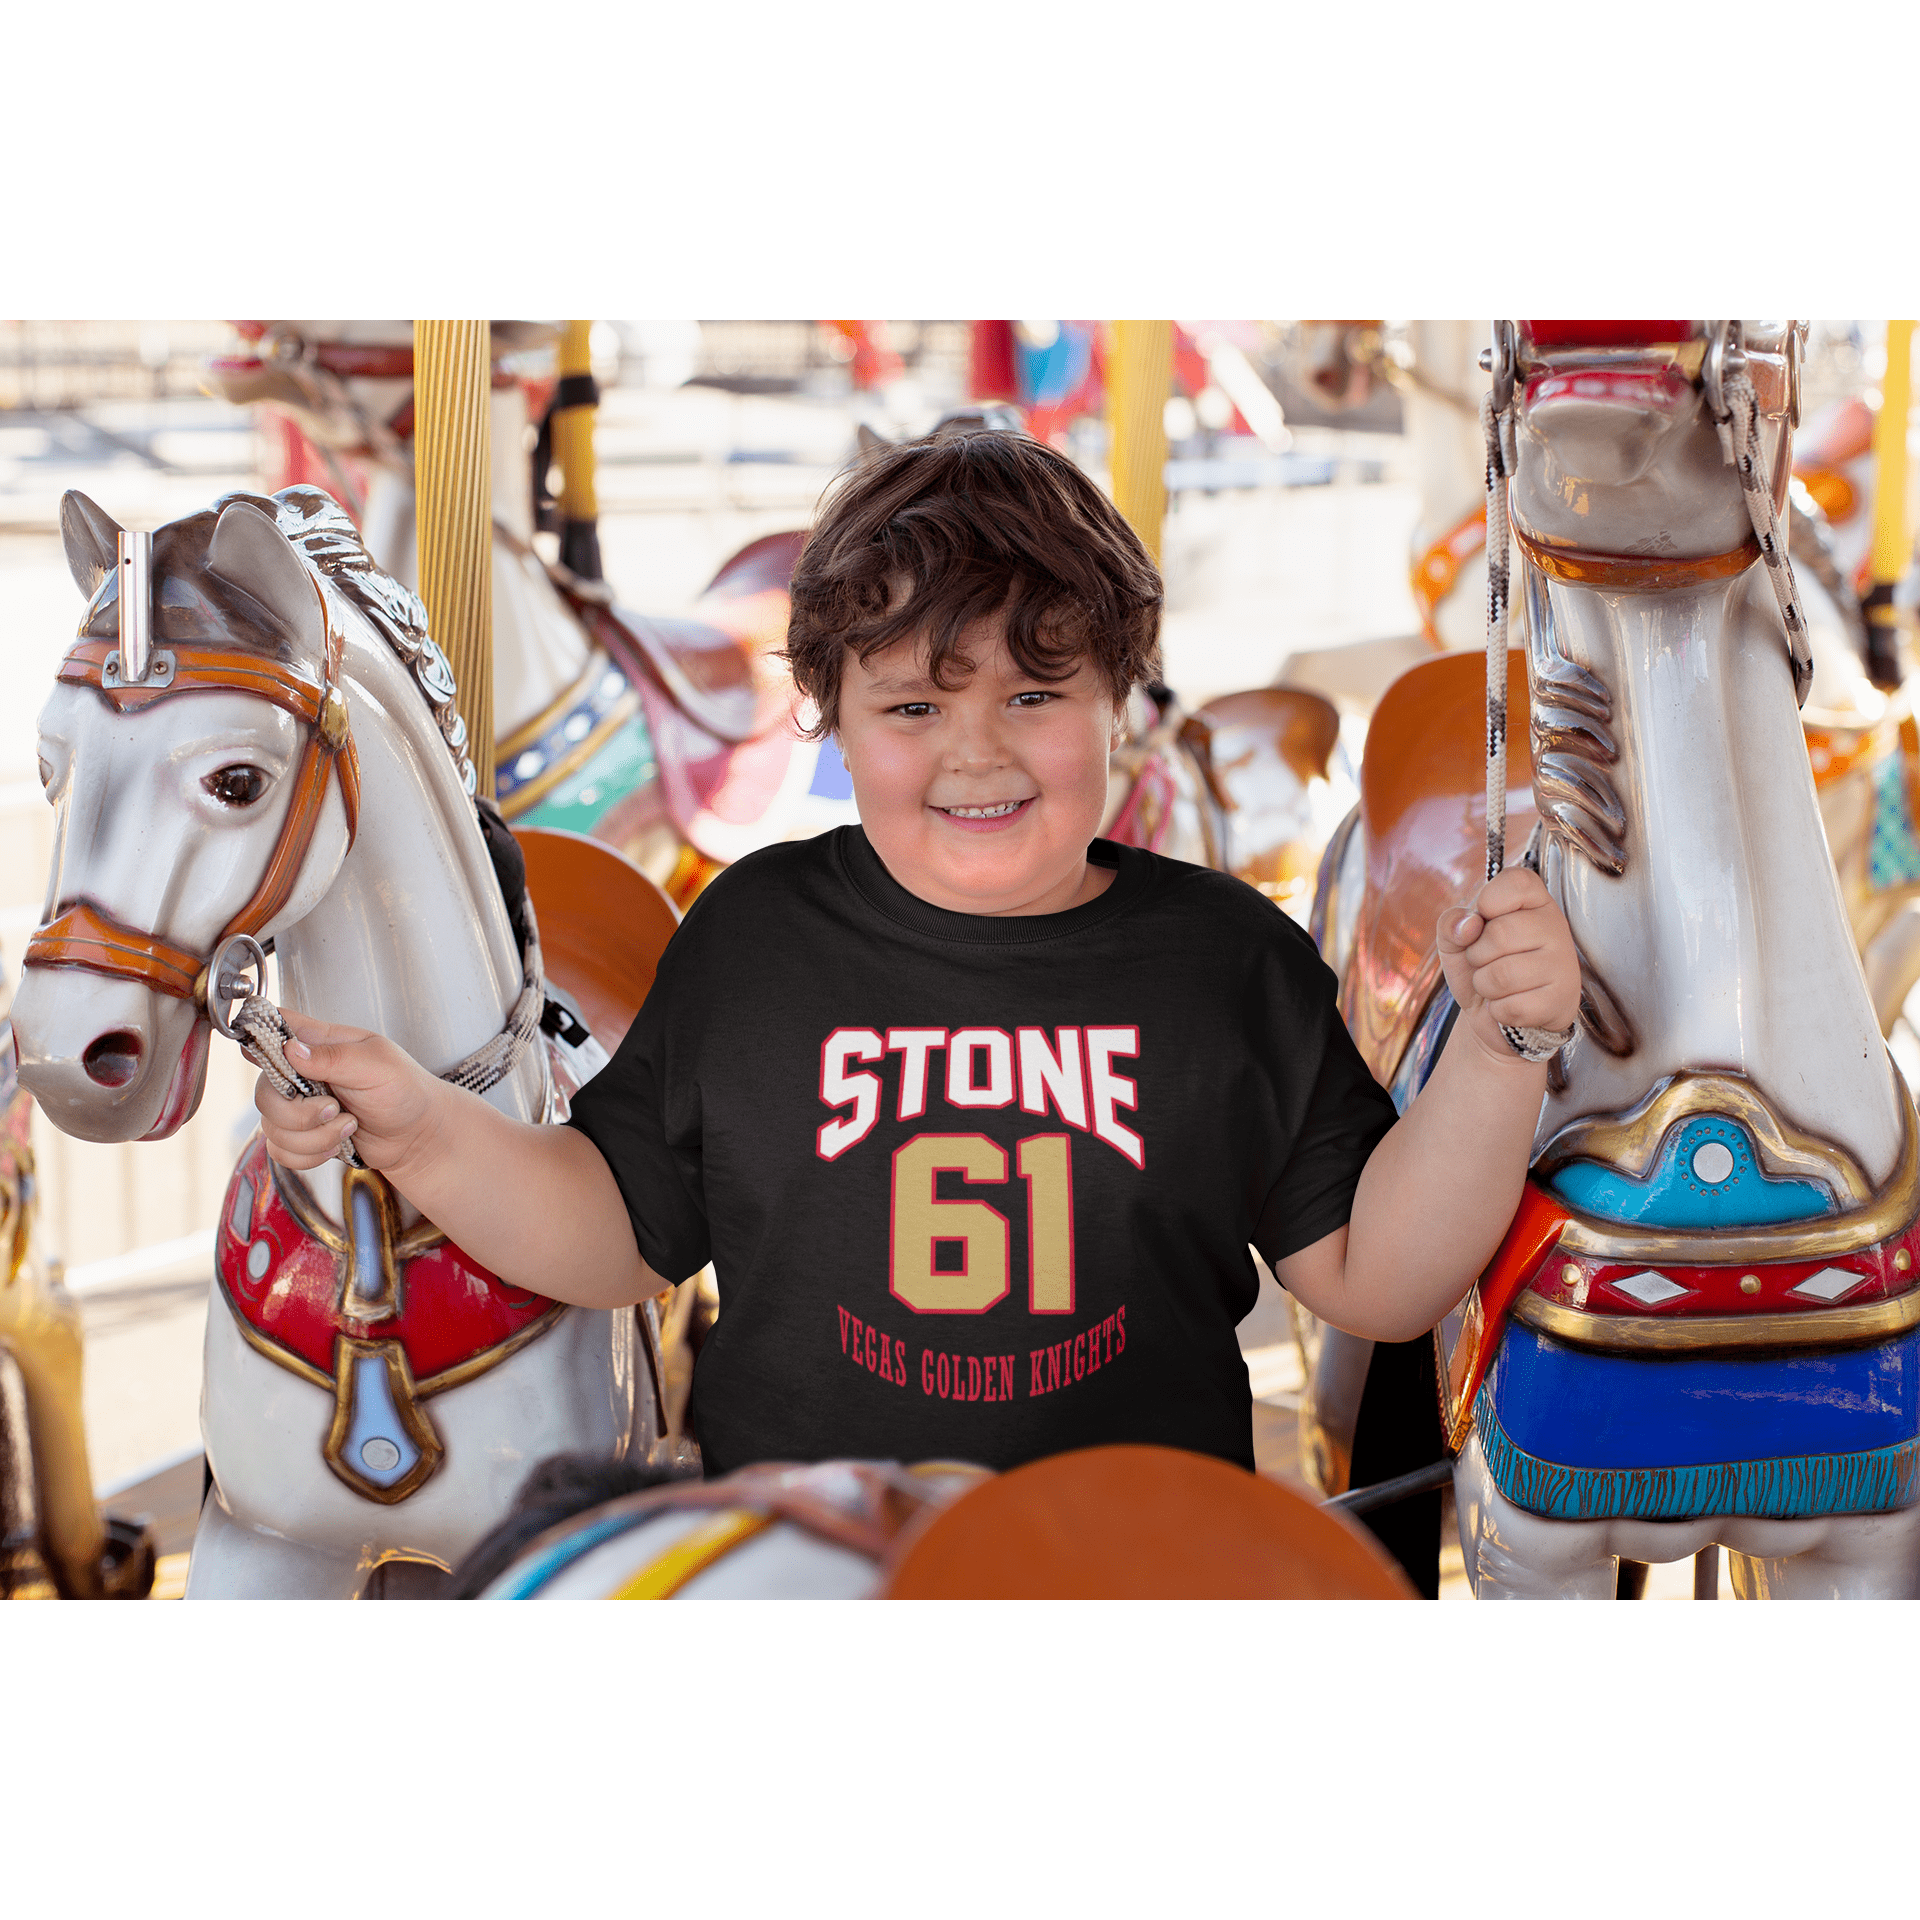 Kids clothes Stone 61 Vegas Golden Knights Retro Kids Tee